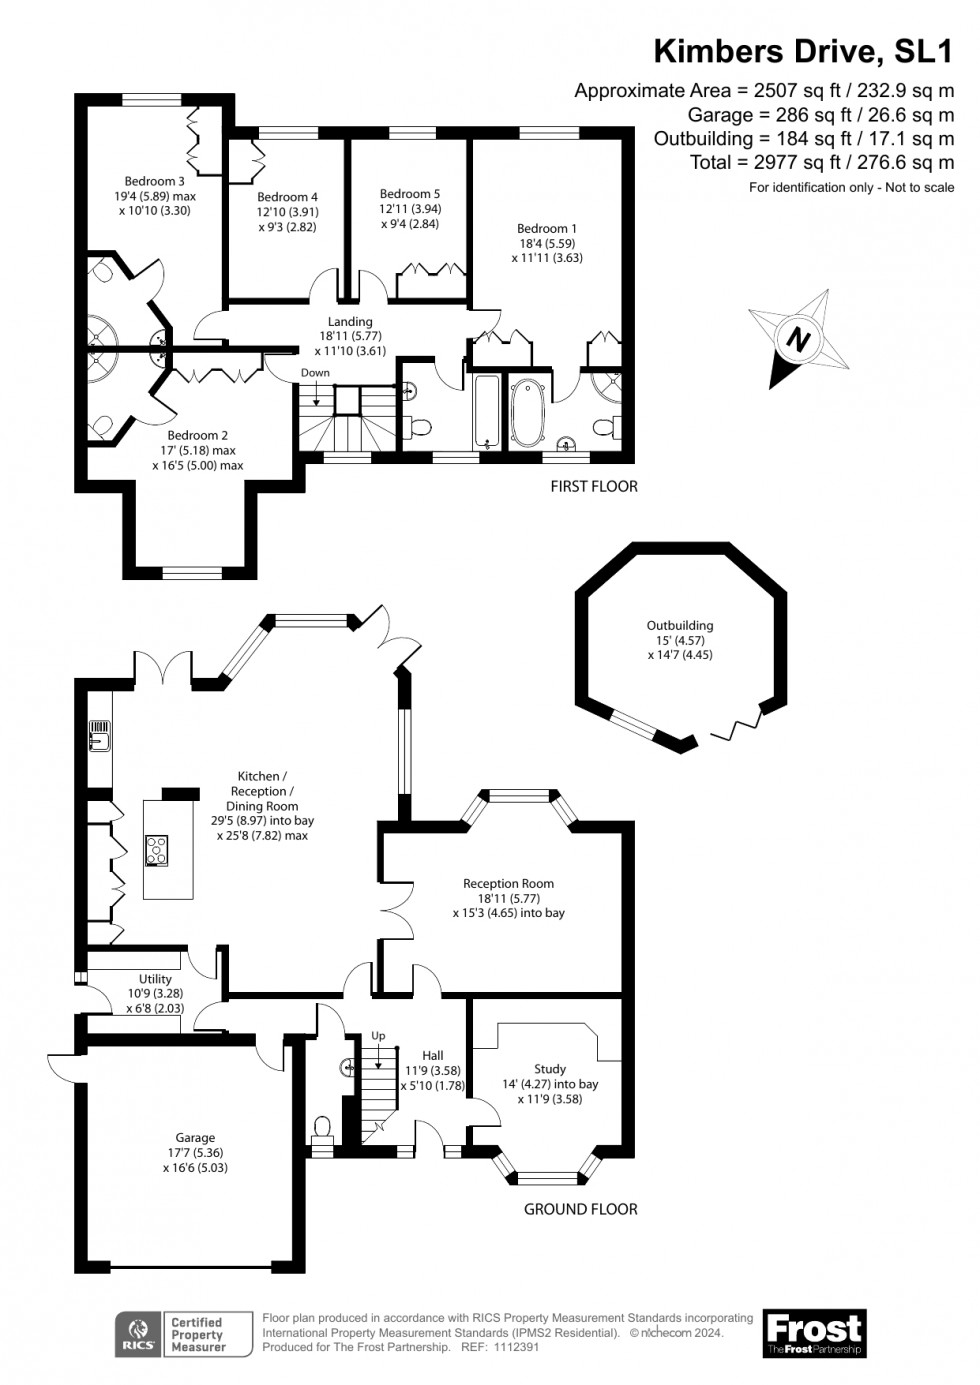 Floorplan for Burnham, Burnham, SL1